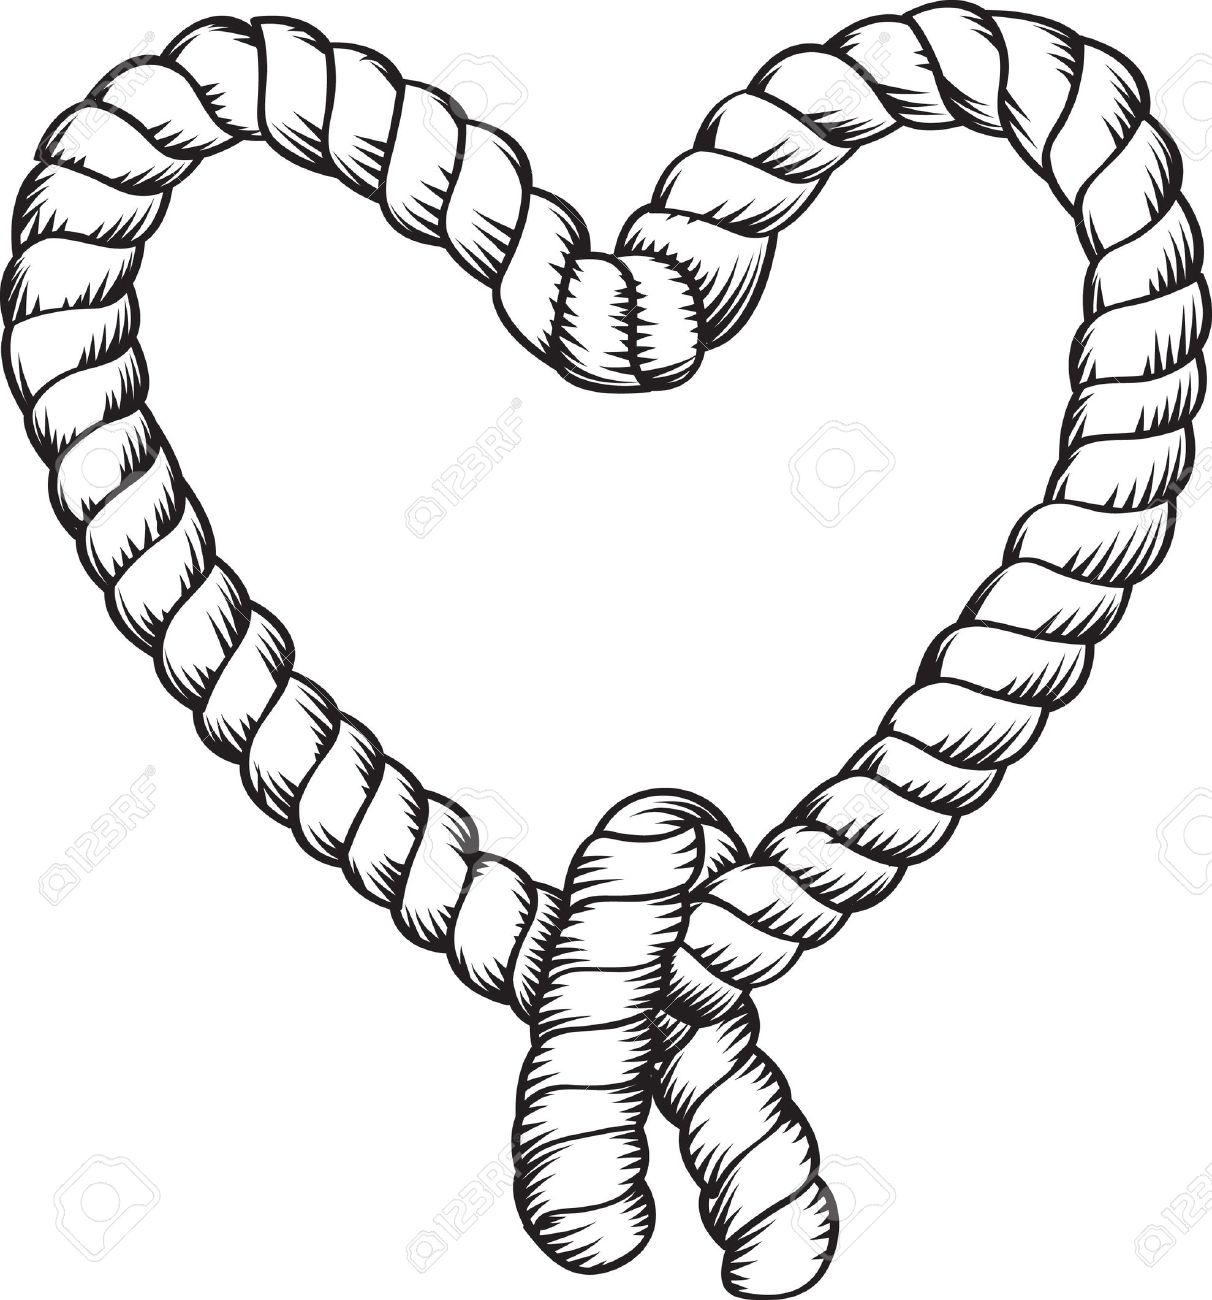 Rope Clip Art Vector